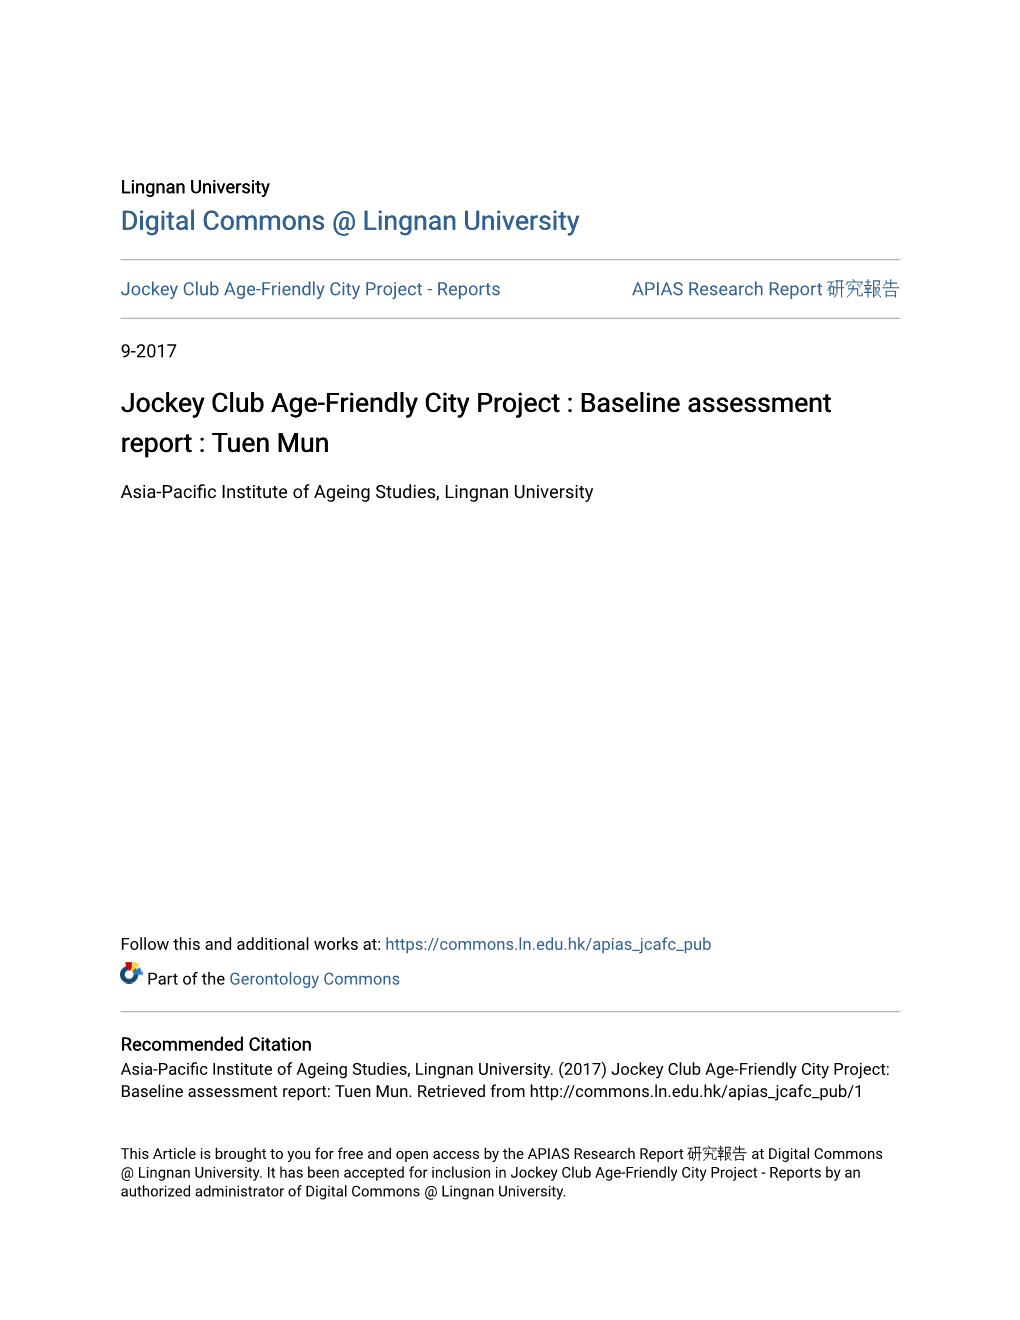 Baseline Assessment Report : Tuen Mun